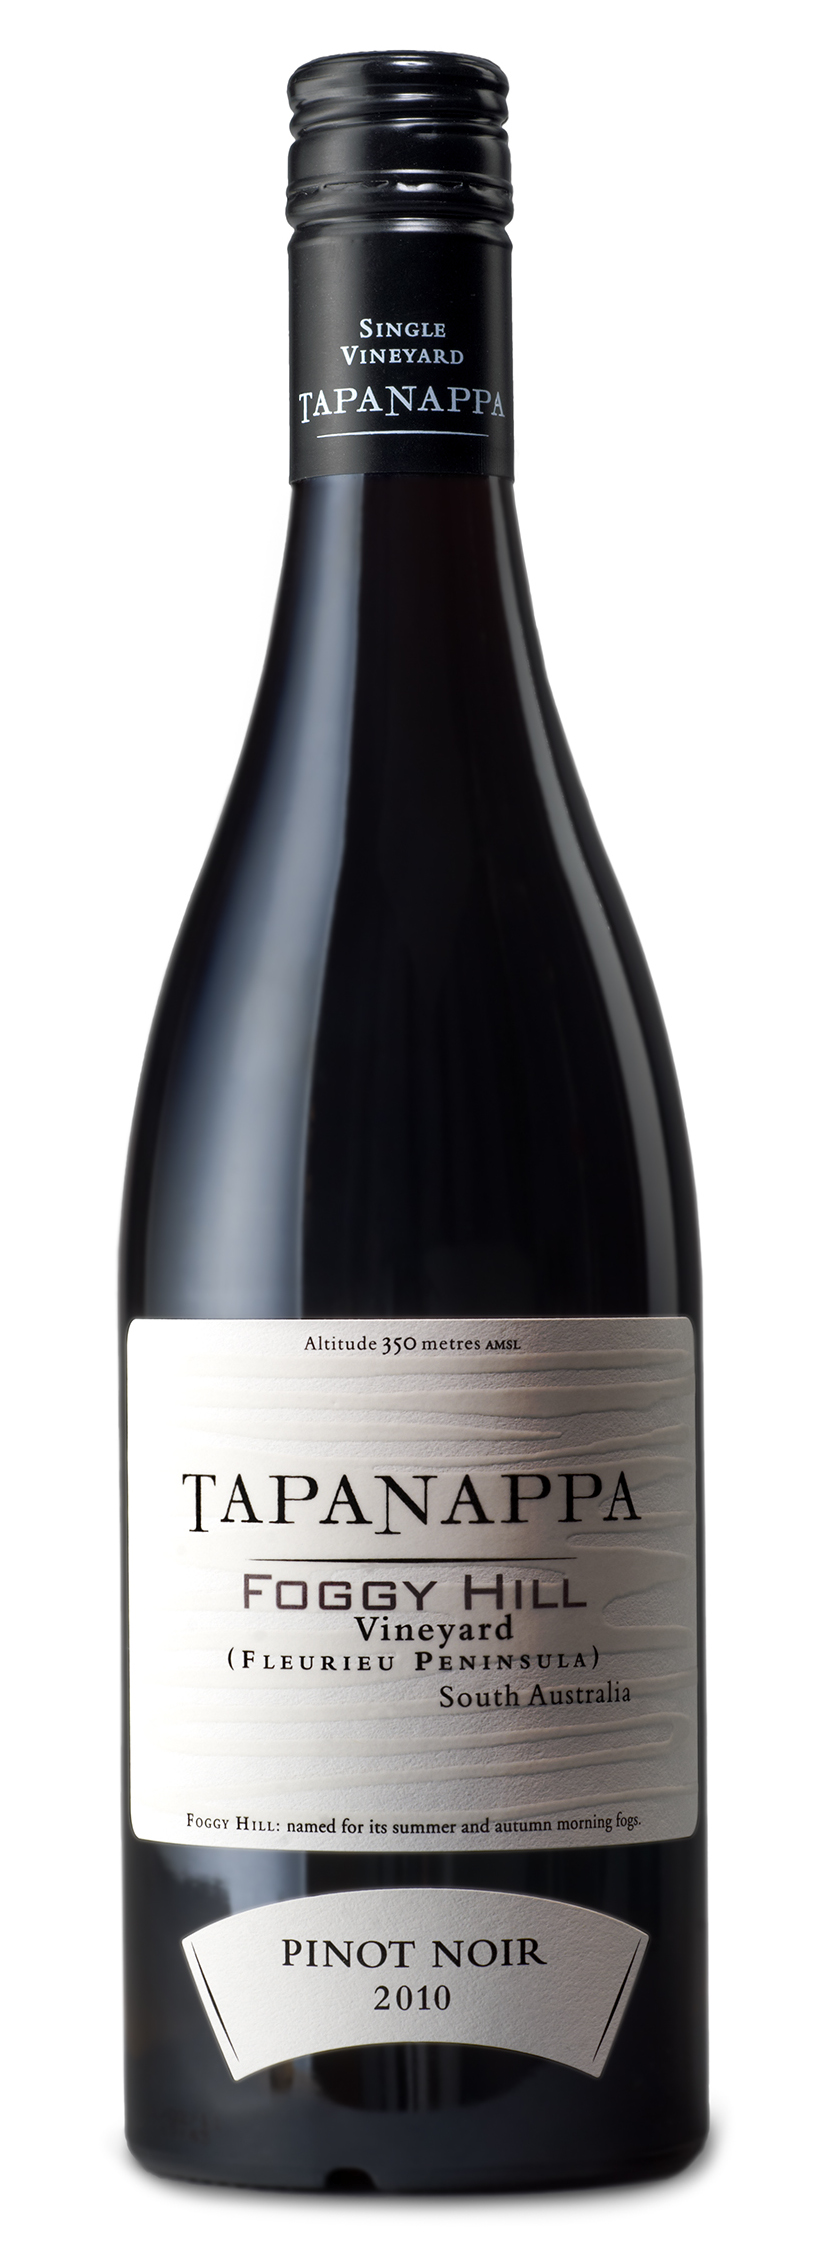 Tapanappa Foggy Hill Vineyard 2010 Pinot Noir bottleshot